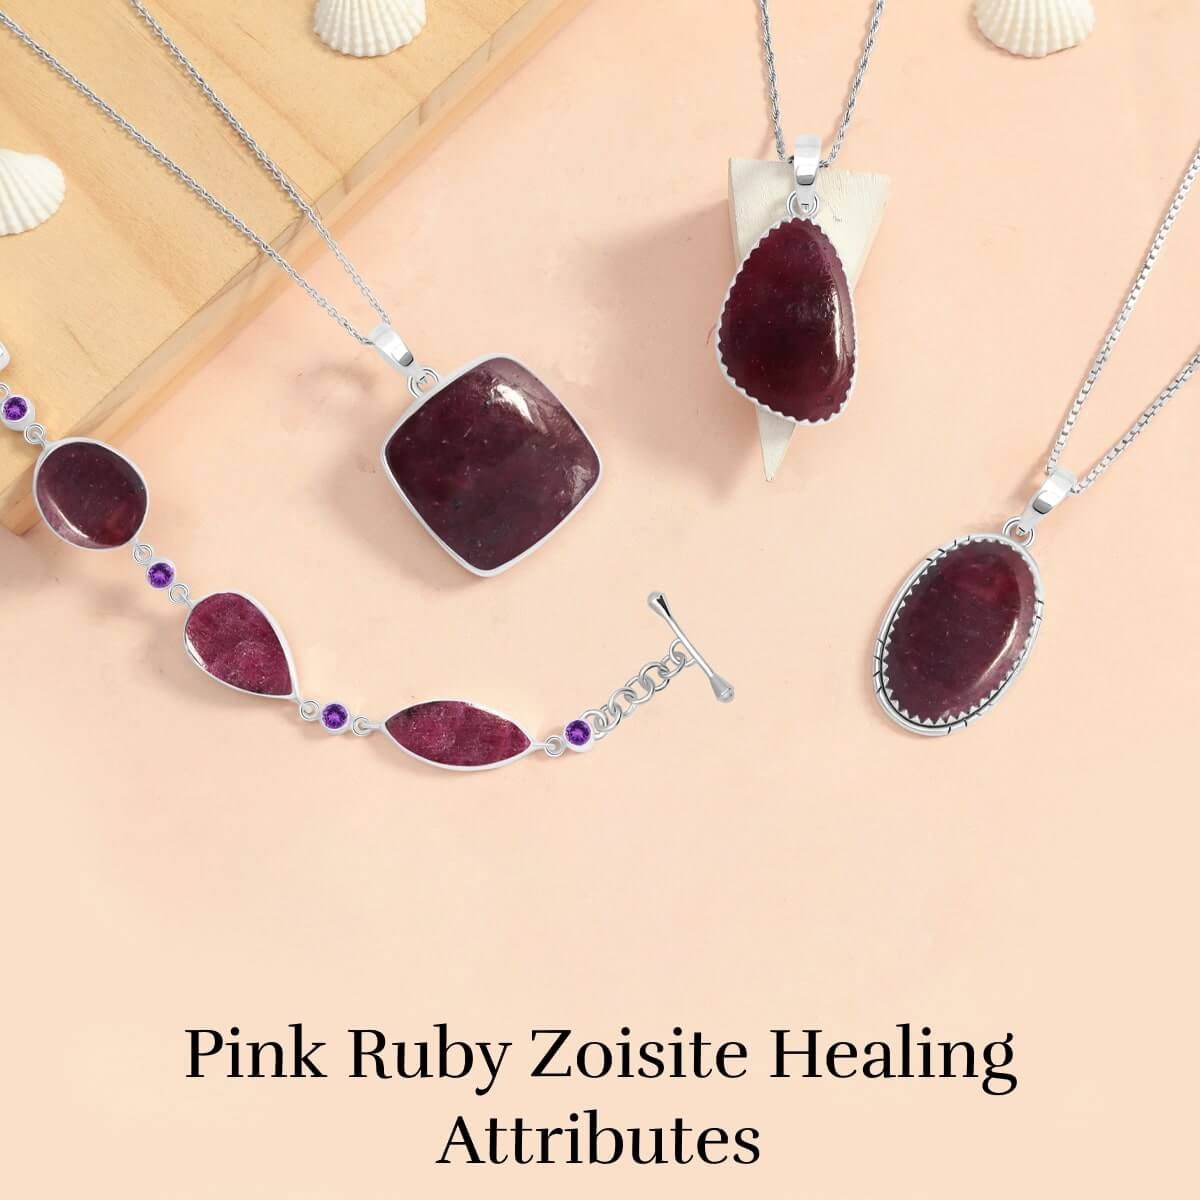 Pink Ruby Zoisite Healing Properties